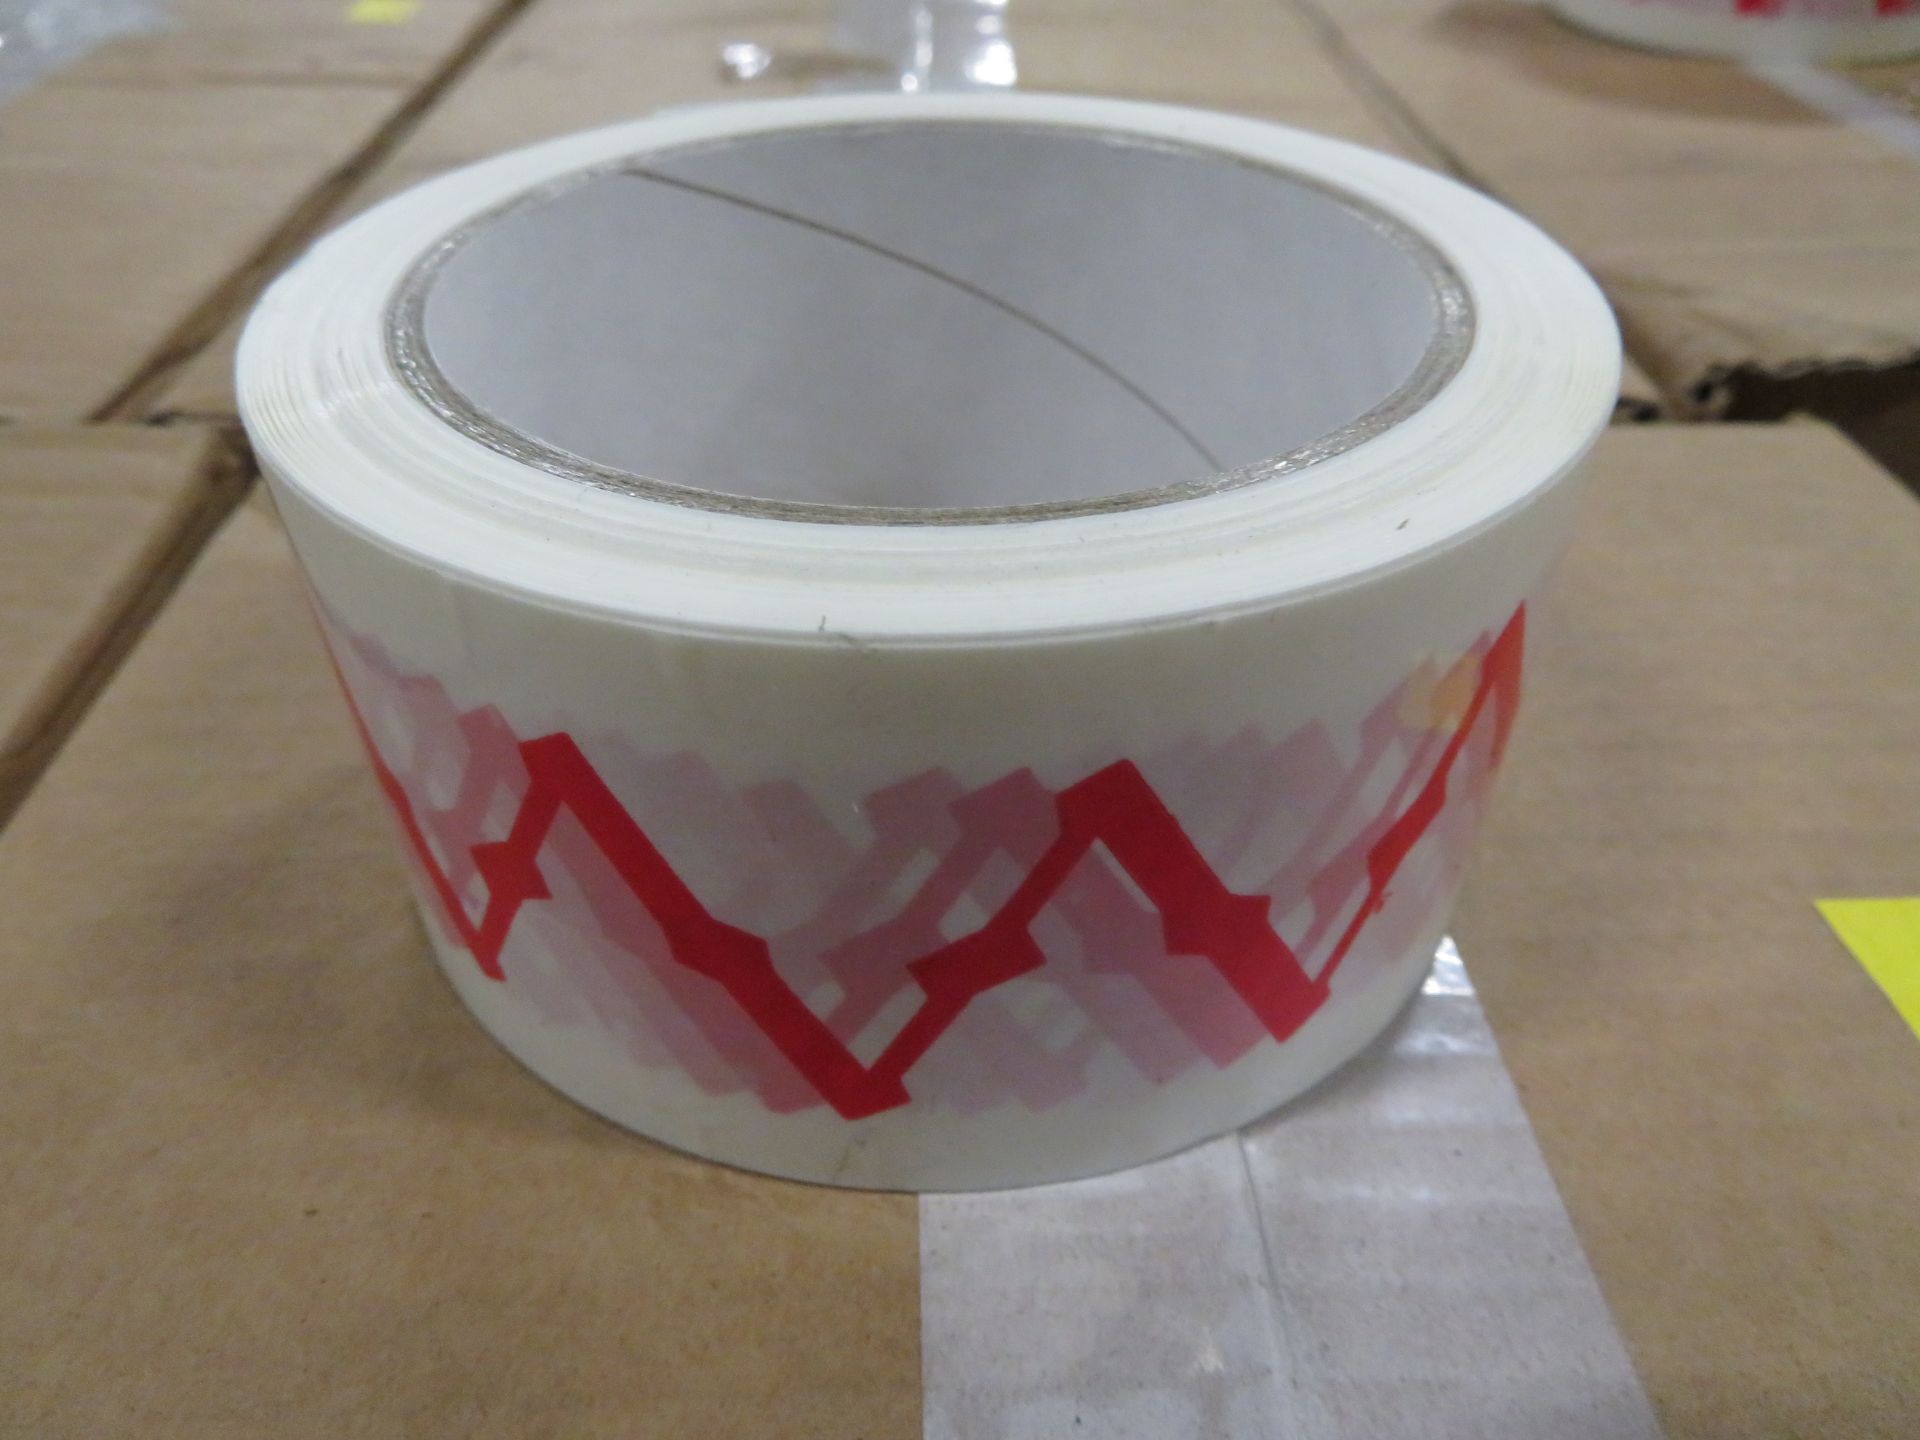 Pressure Sensitive Adhesive Tape - 36 rolls per Box - 29 boxes - Image 2 of 3